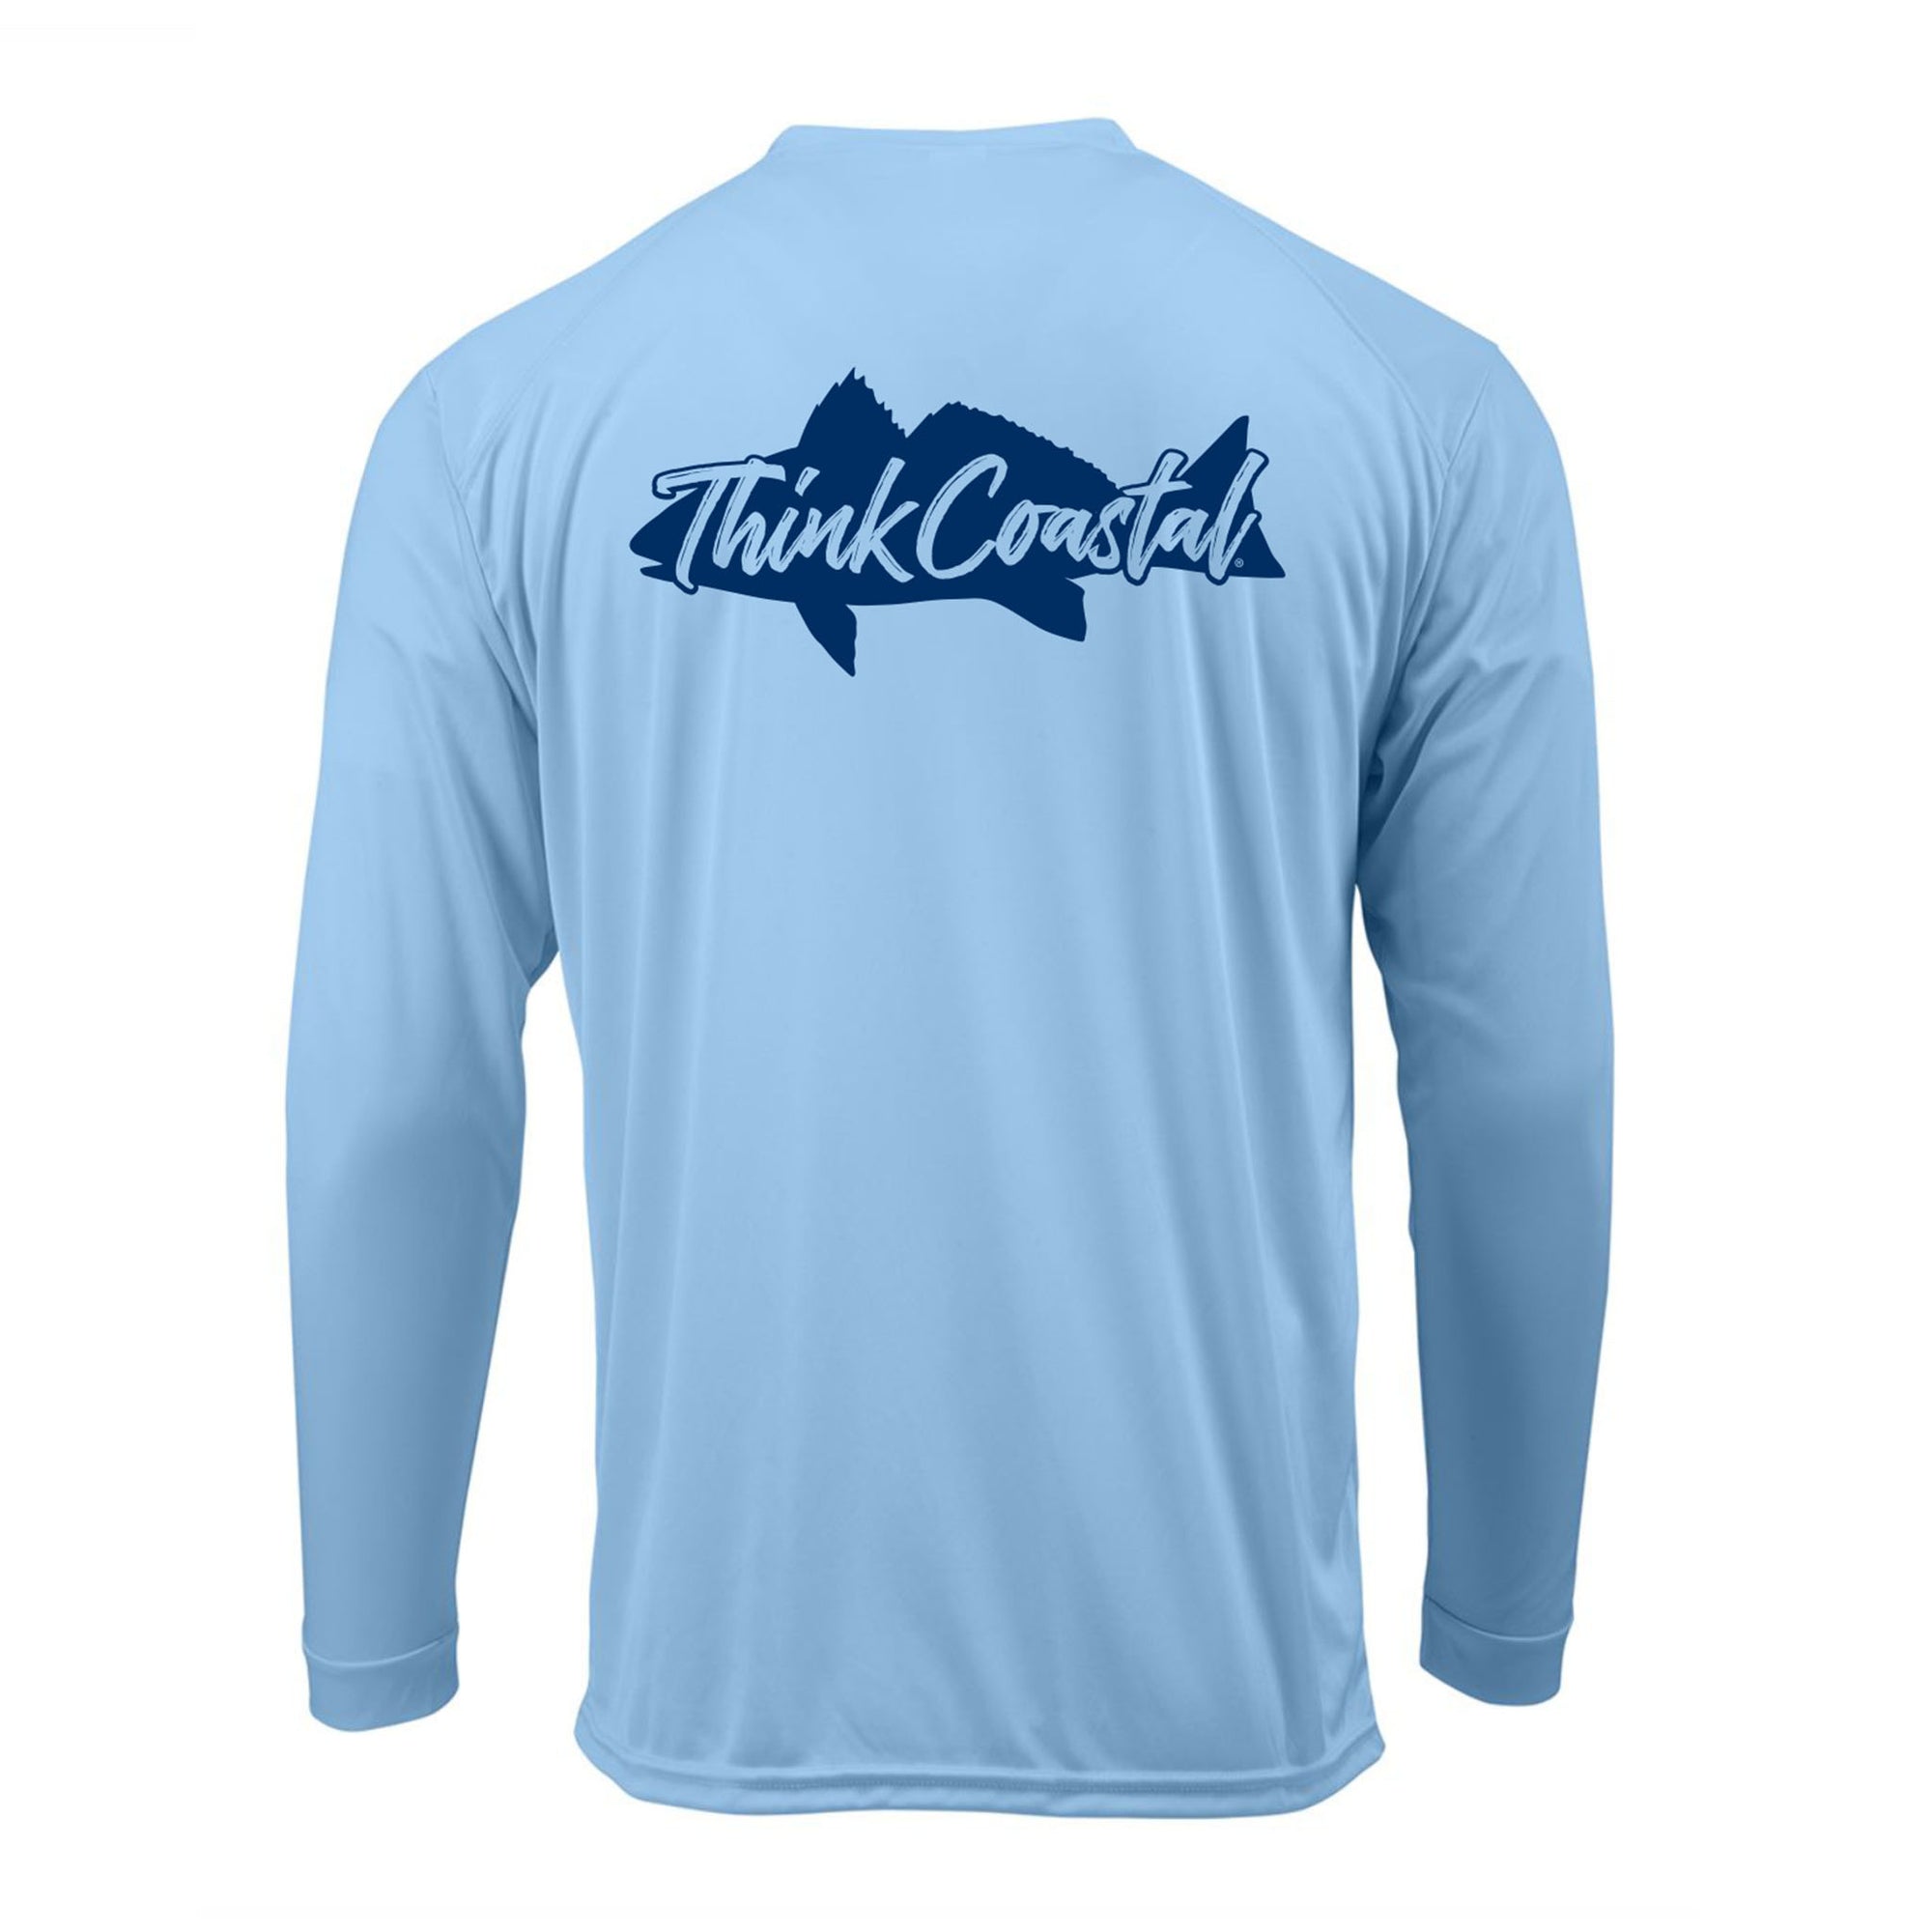 Redfish Performance Shirt - Blue Mist